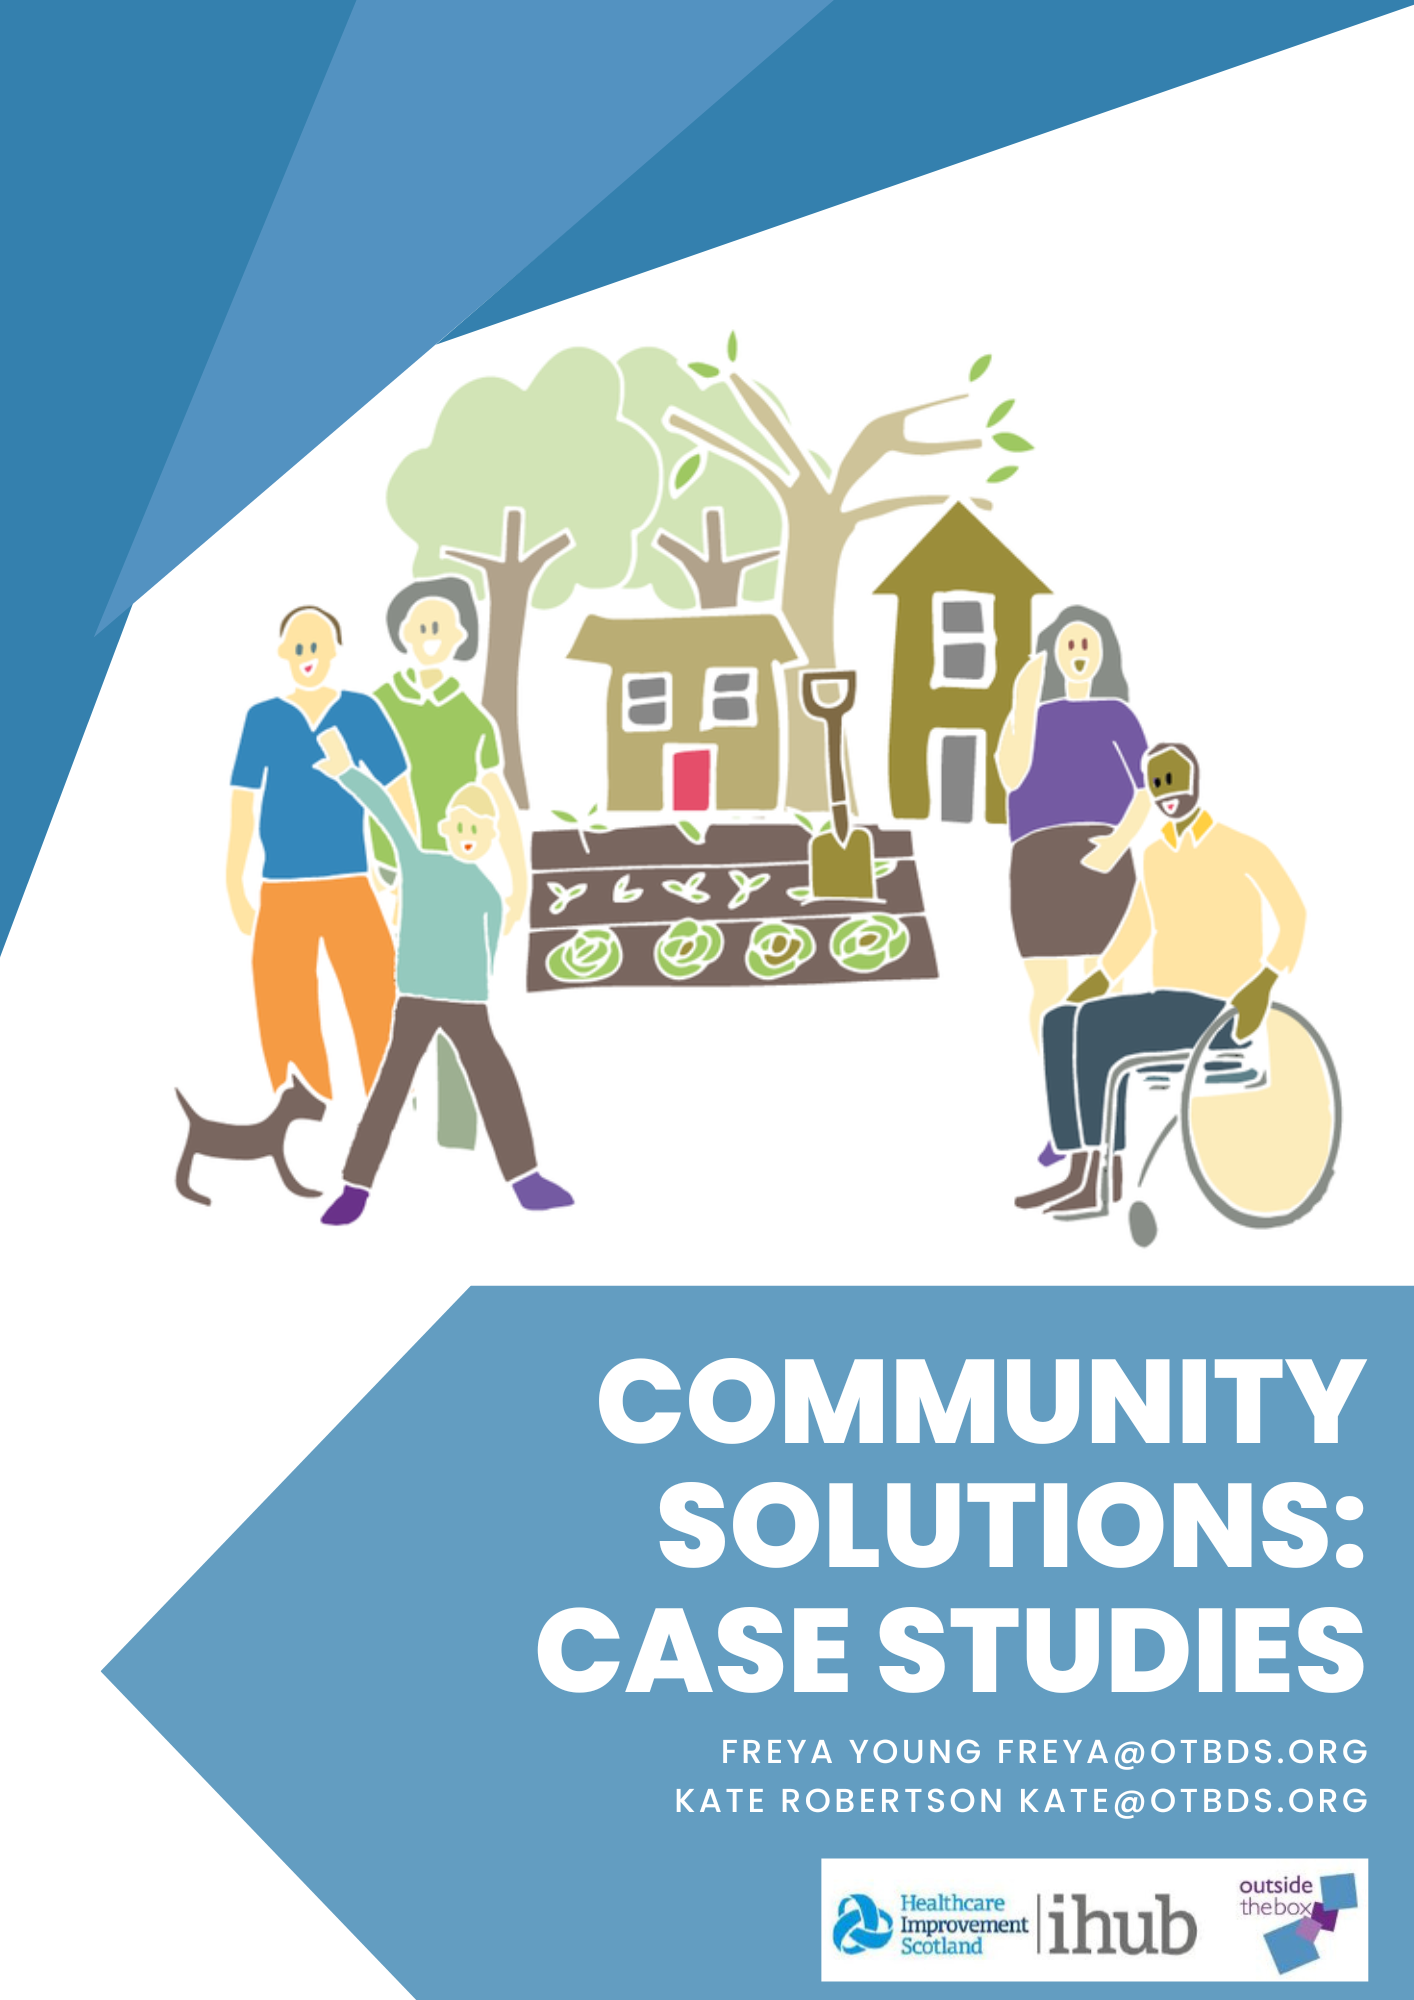 Community solutions Case studies